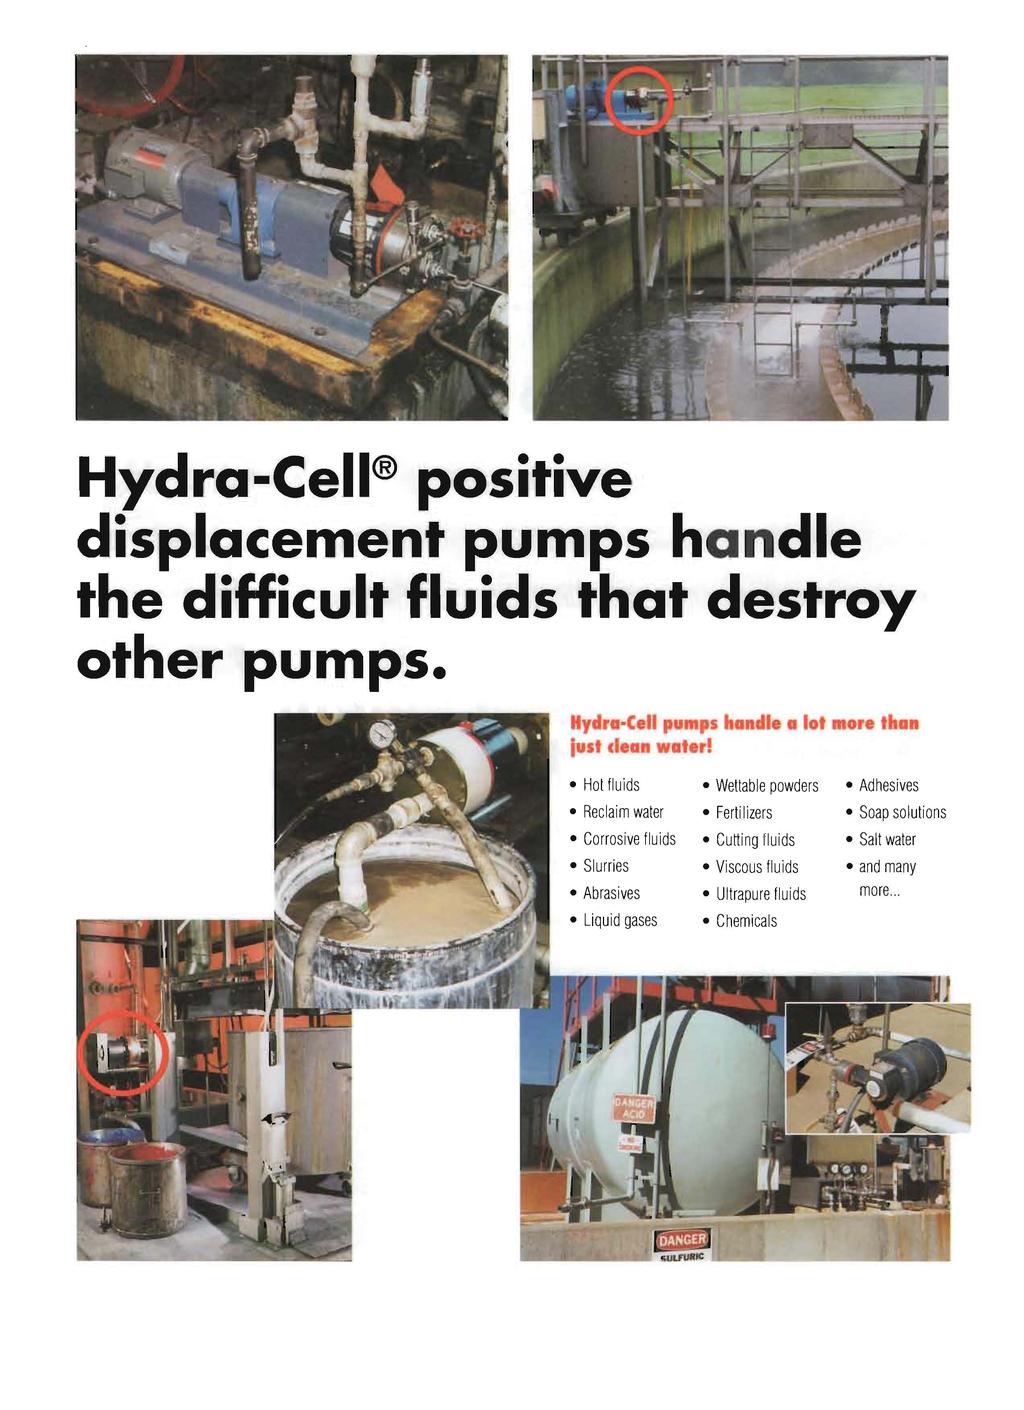 Hydra-Cell positive displacemen-t pumps handle the difficult fluids that destroy other pumps. Hydra-Cell pumps ha die a lot lust dea water!